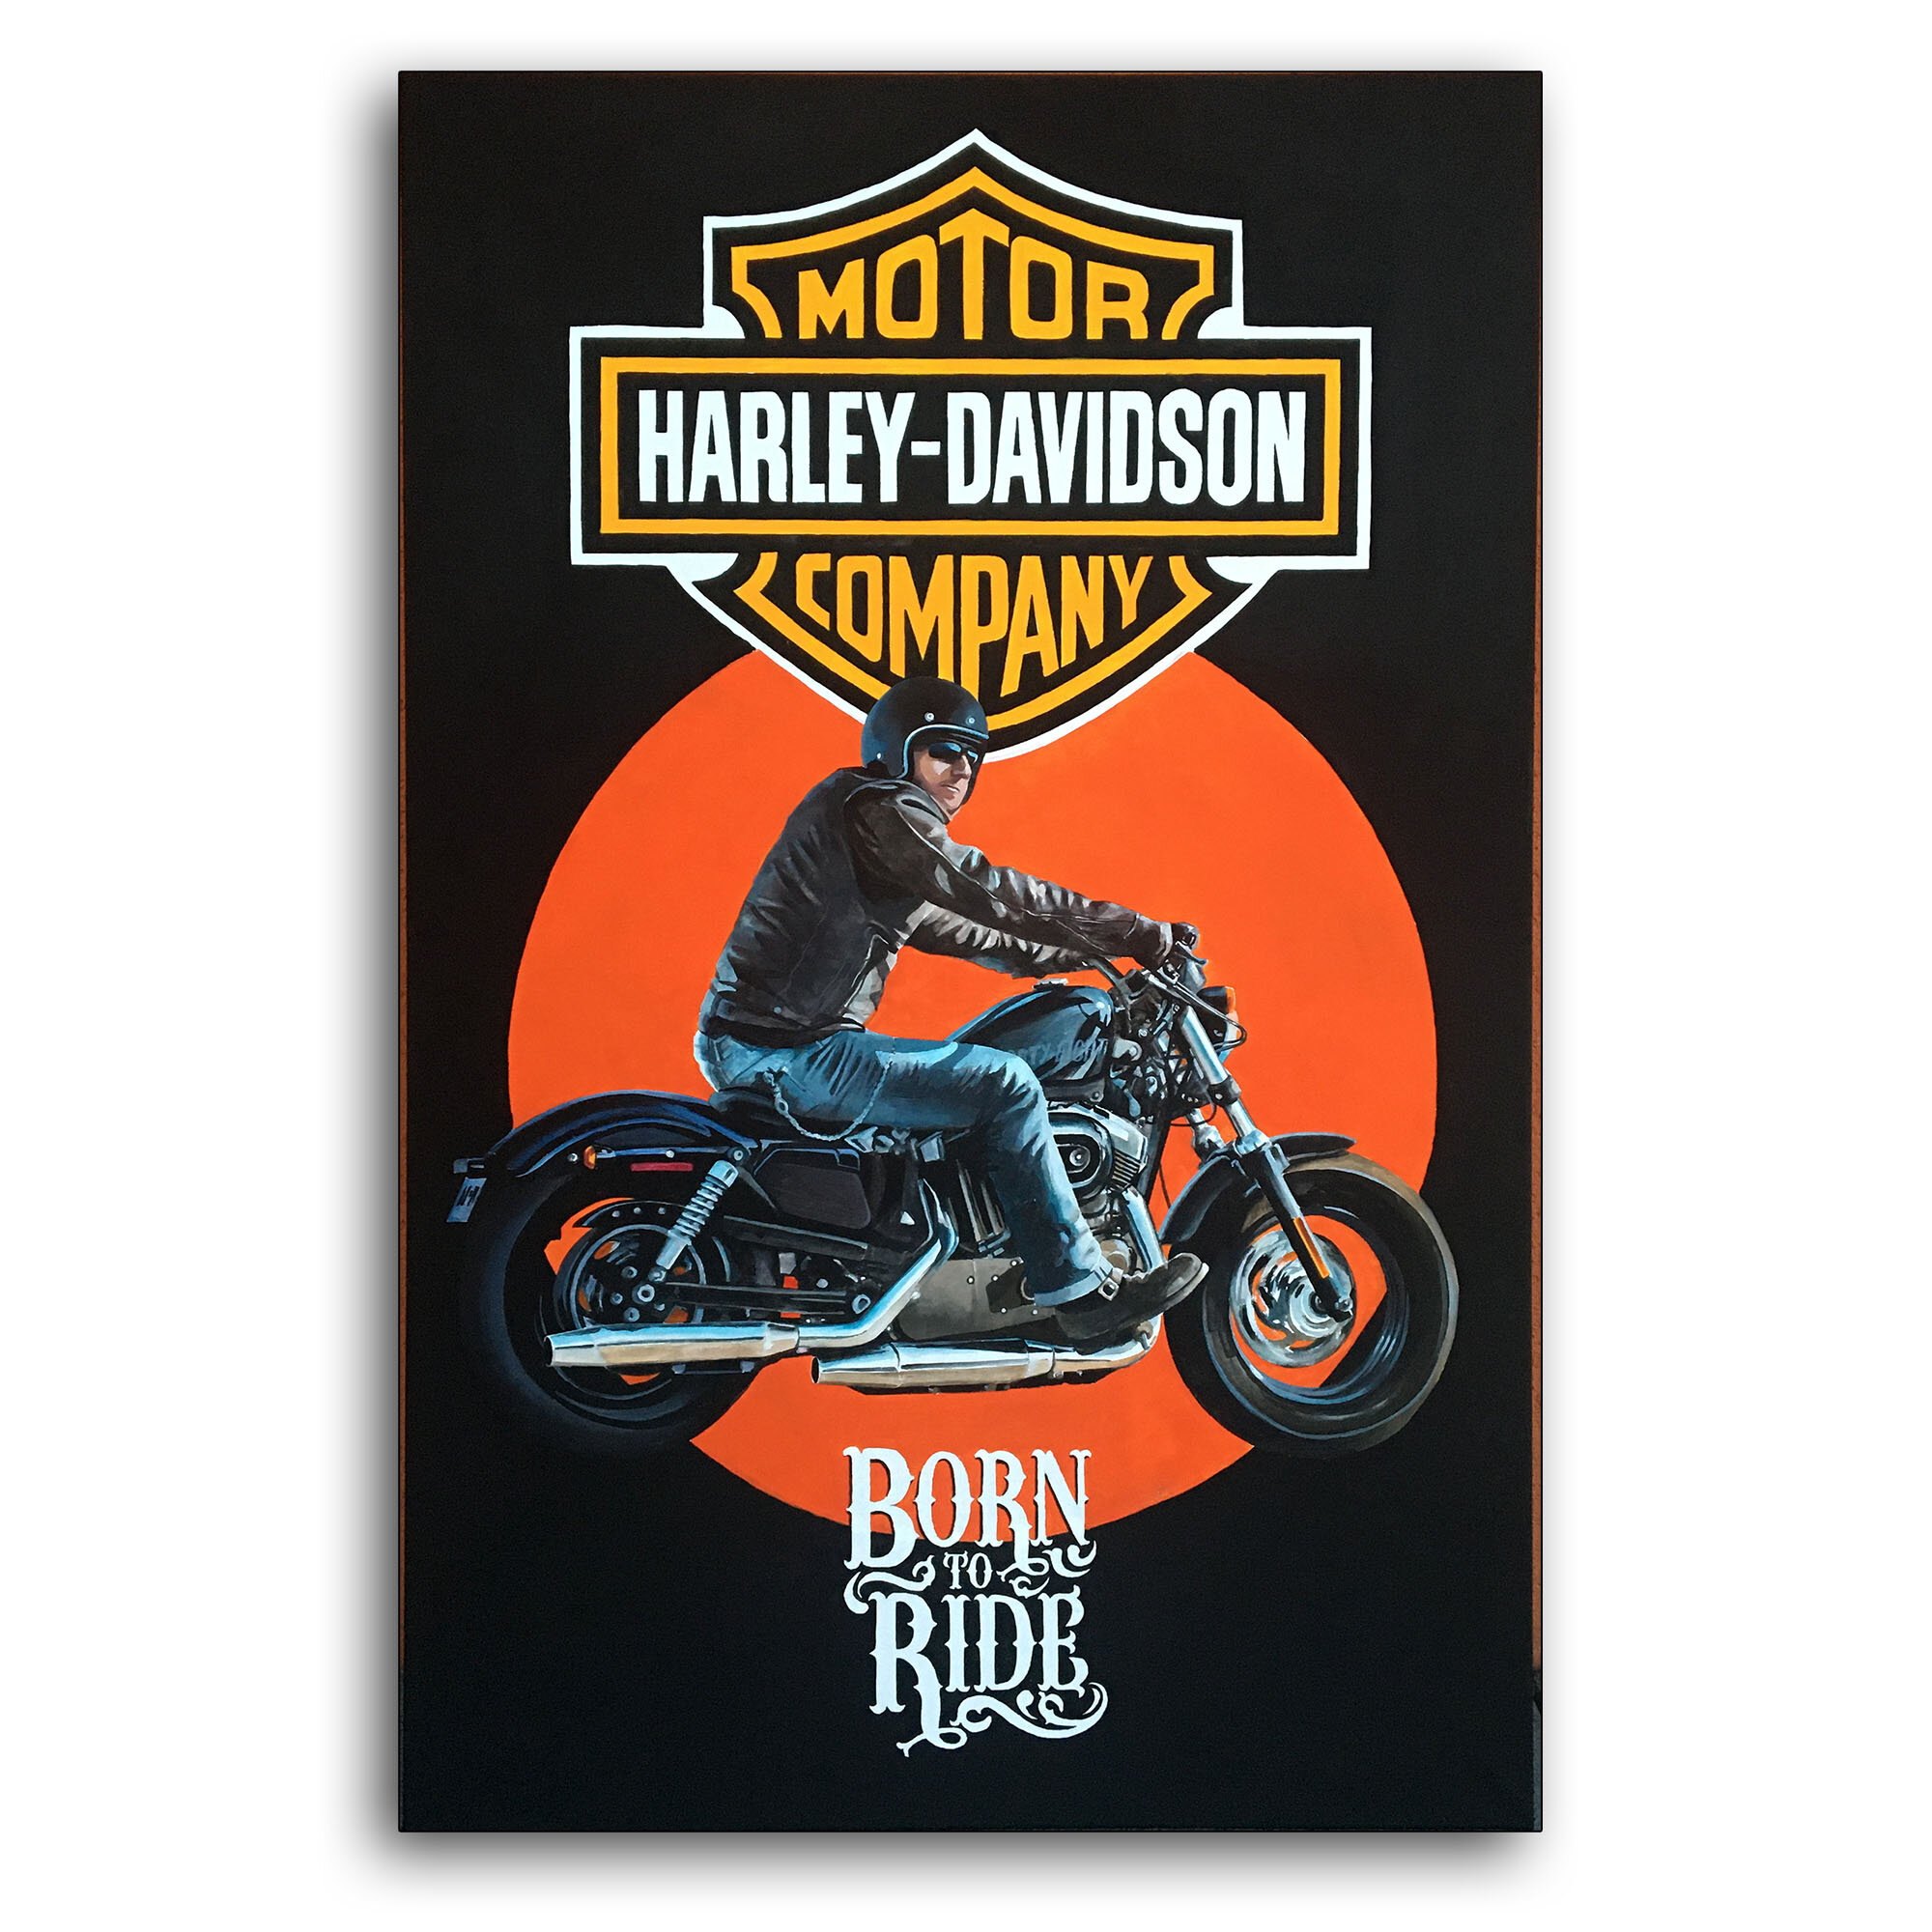 Acryl-Harley-1 copie.jpg